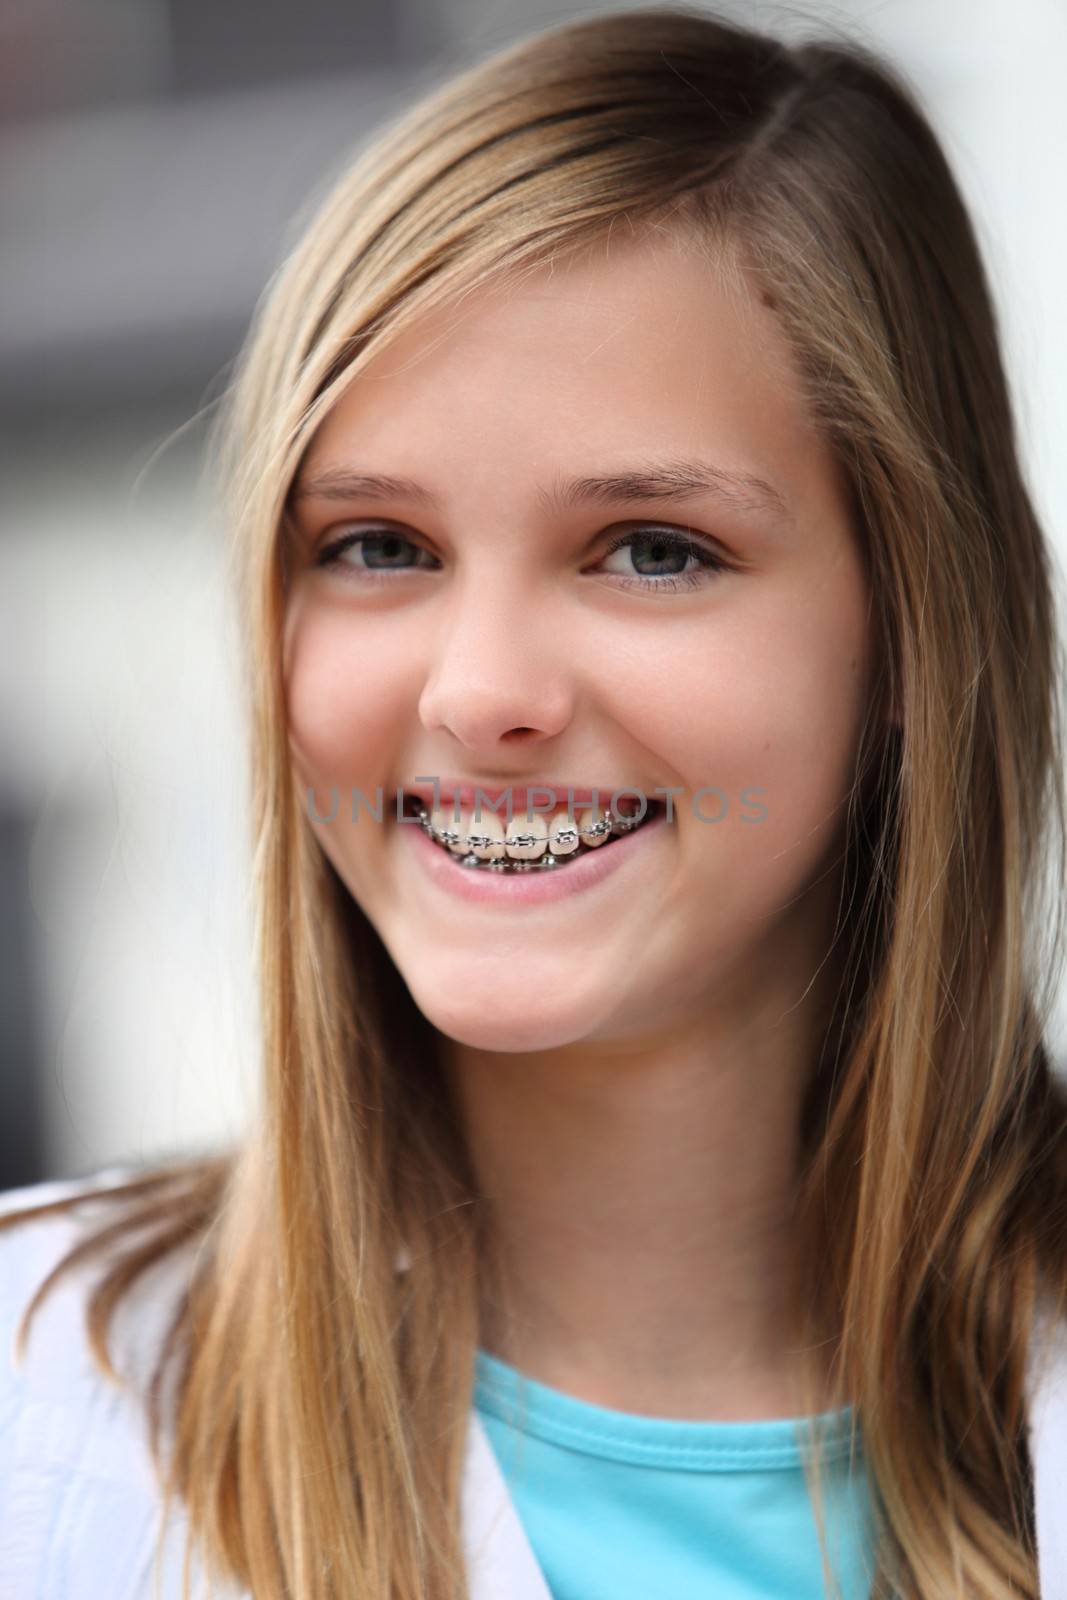 Smiling teenage girl wearing dental braces grinning to show her teeth, closeup headshot